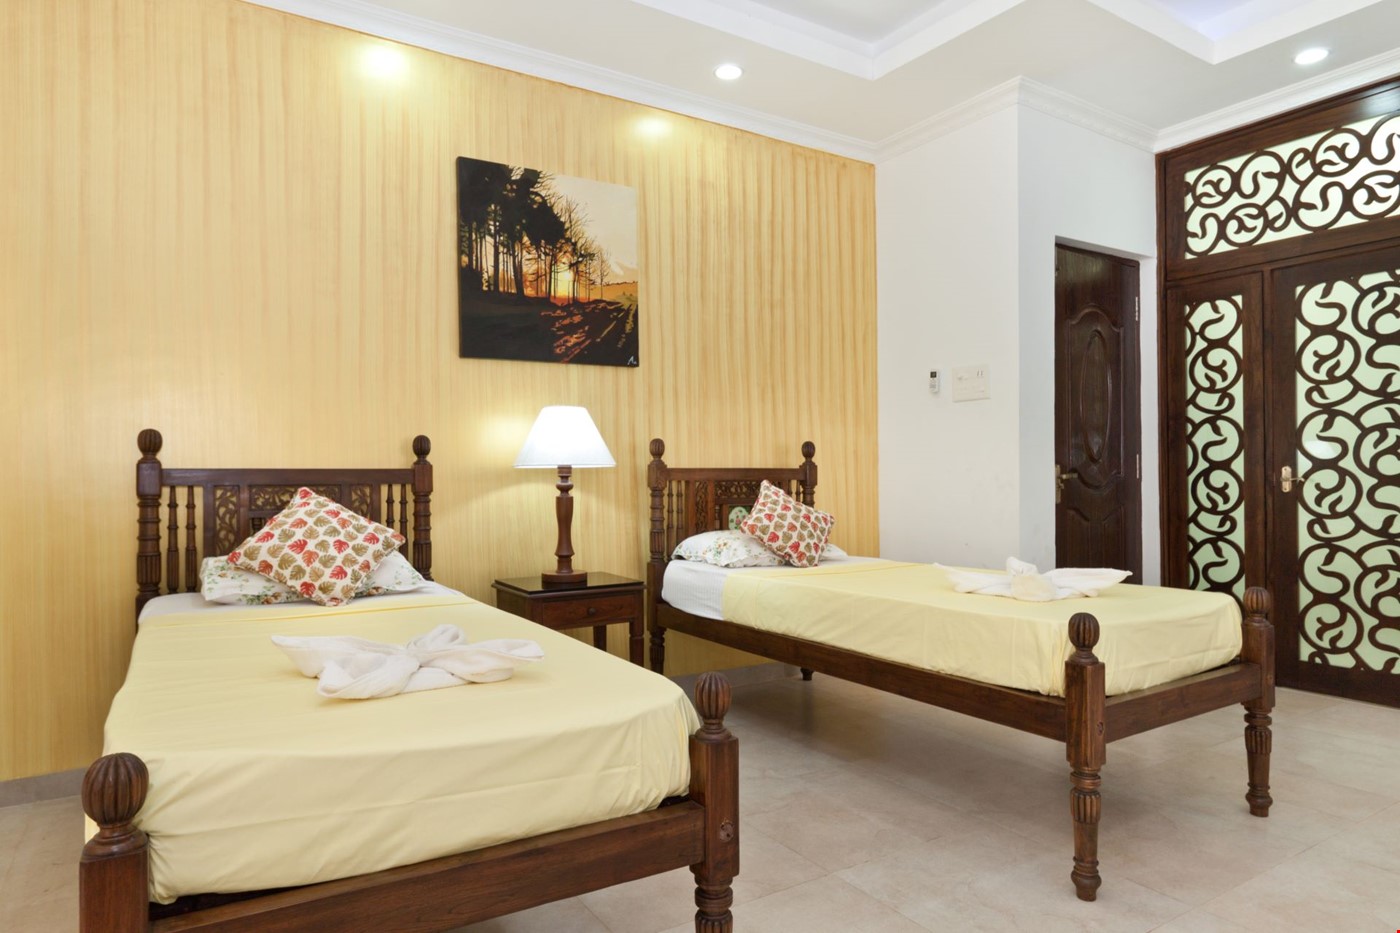 Hotel Goa India nomad remote e56931f9-7fcb-4fc4-9822-b44a73753782_48VillaFurnishedWithModernTouch.jpg